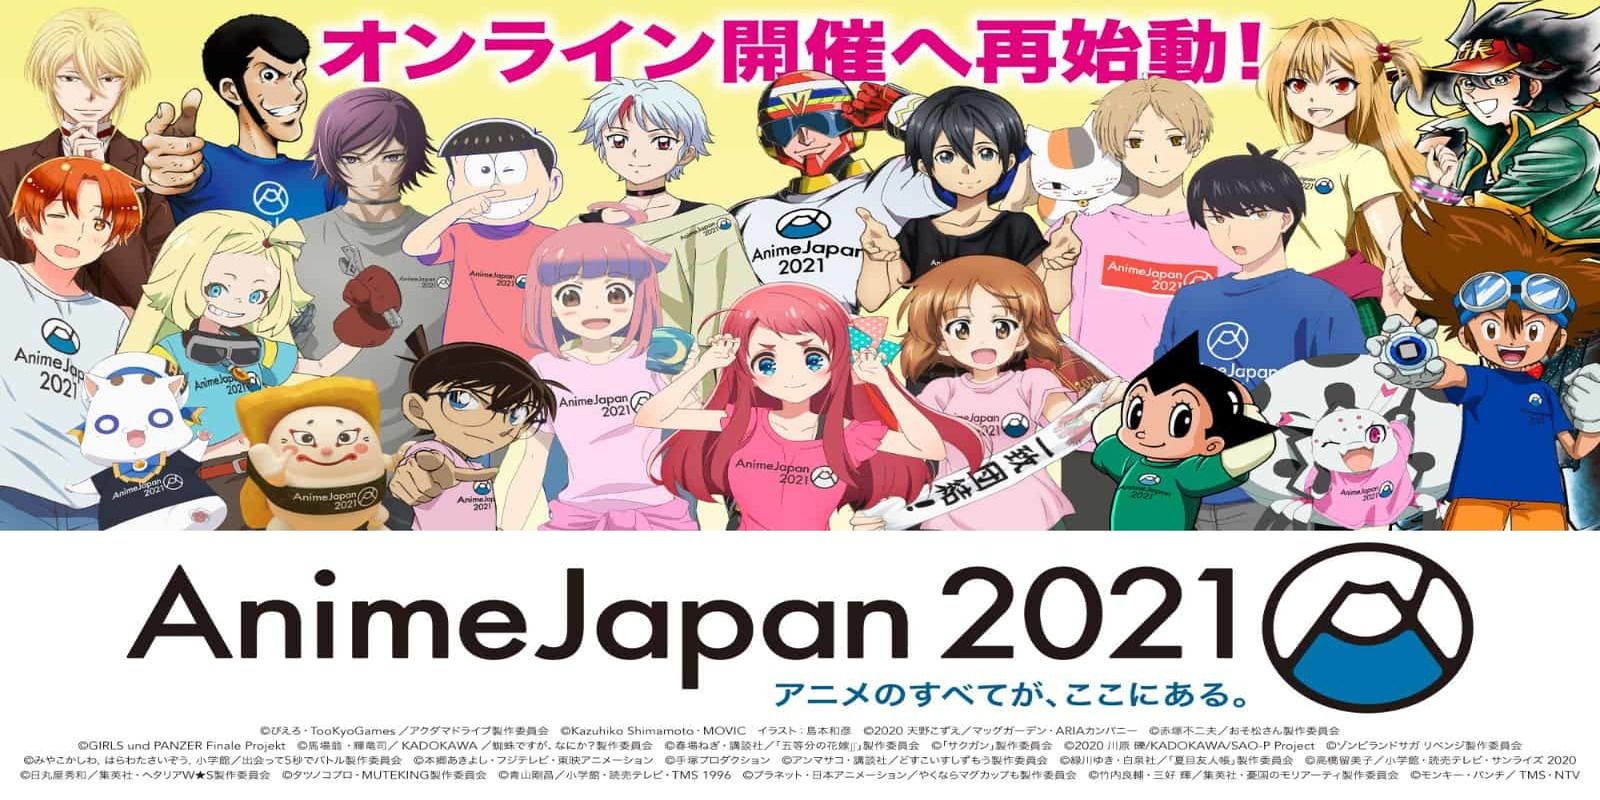 Anime Japan, Tokyo, promo poster 2021